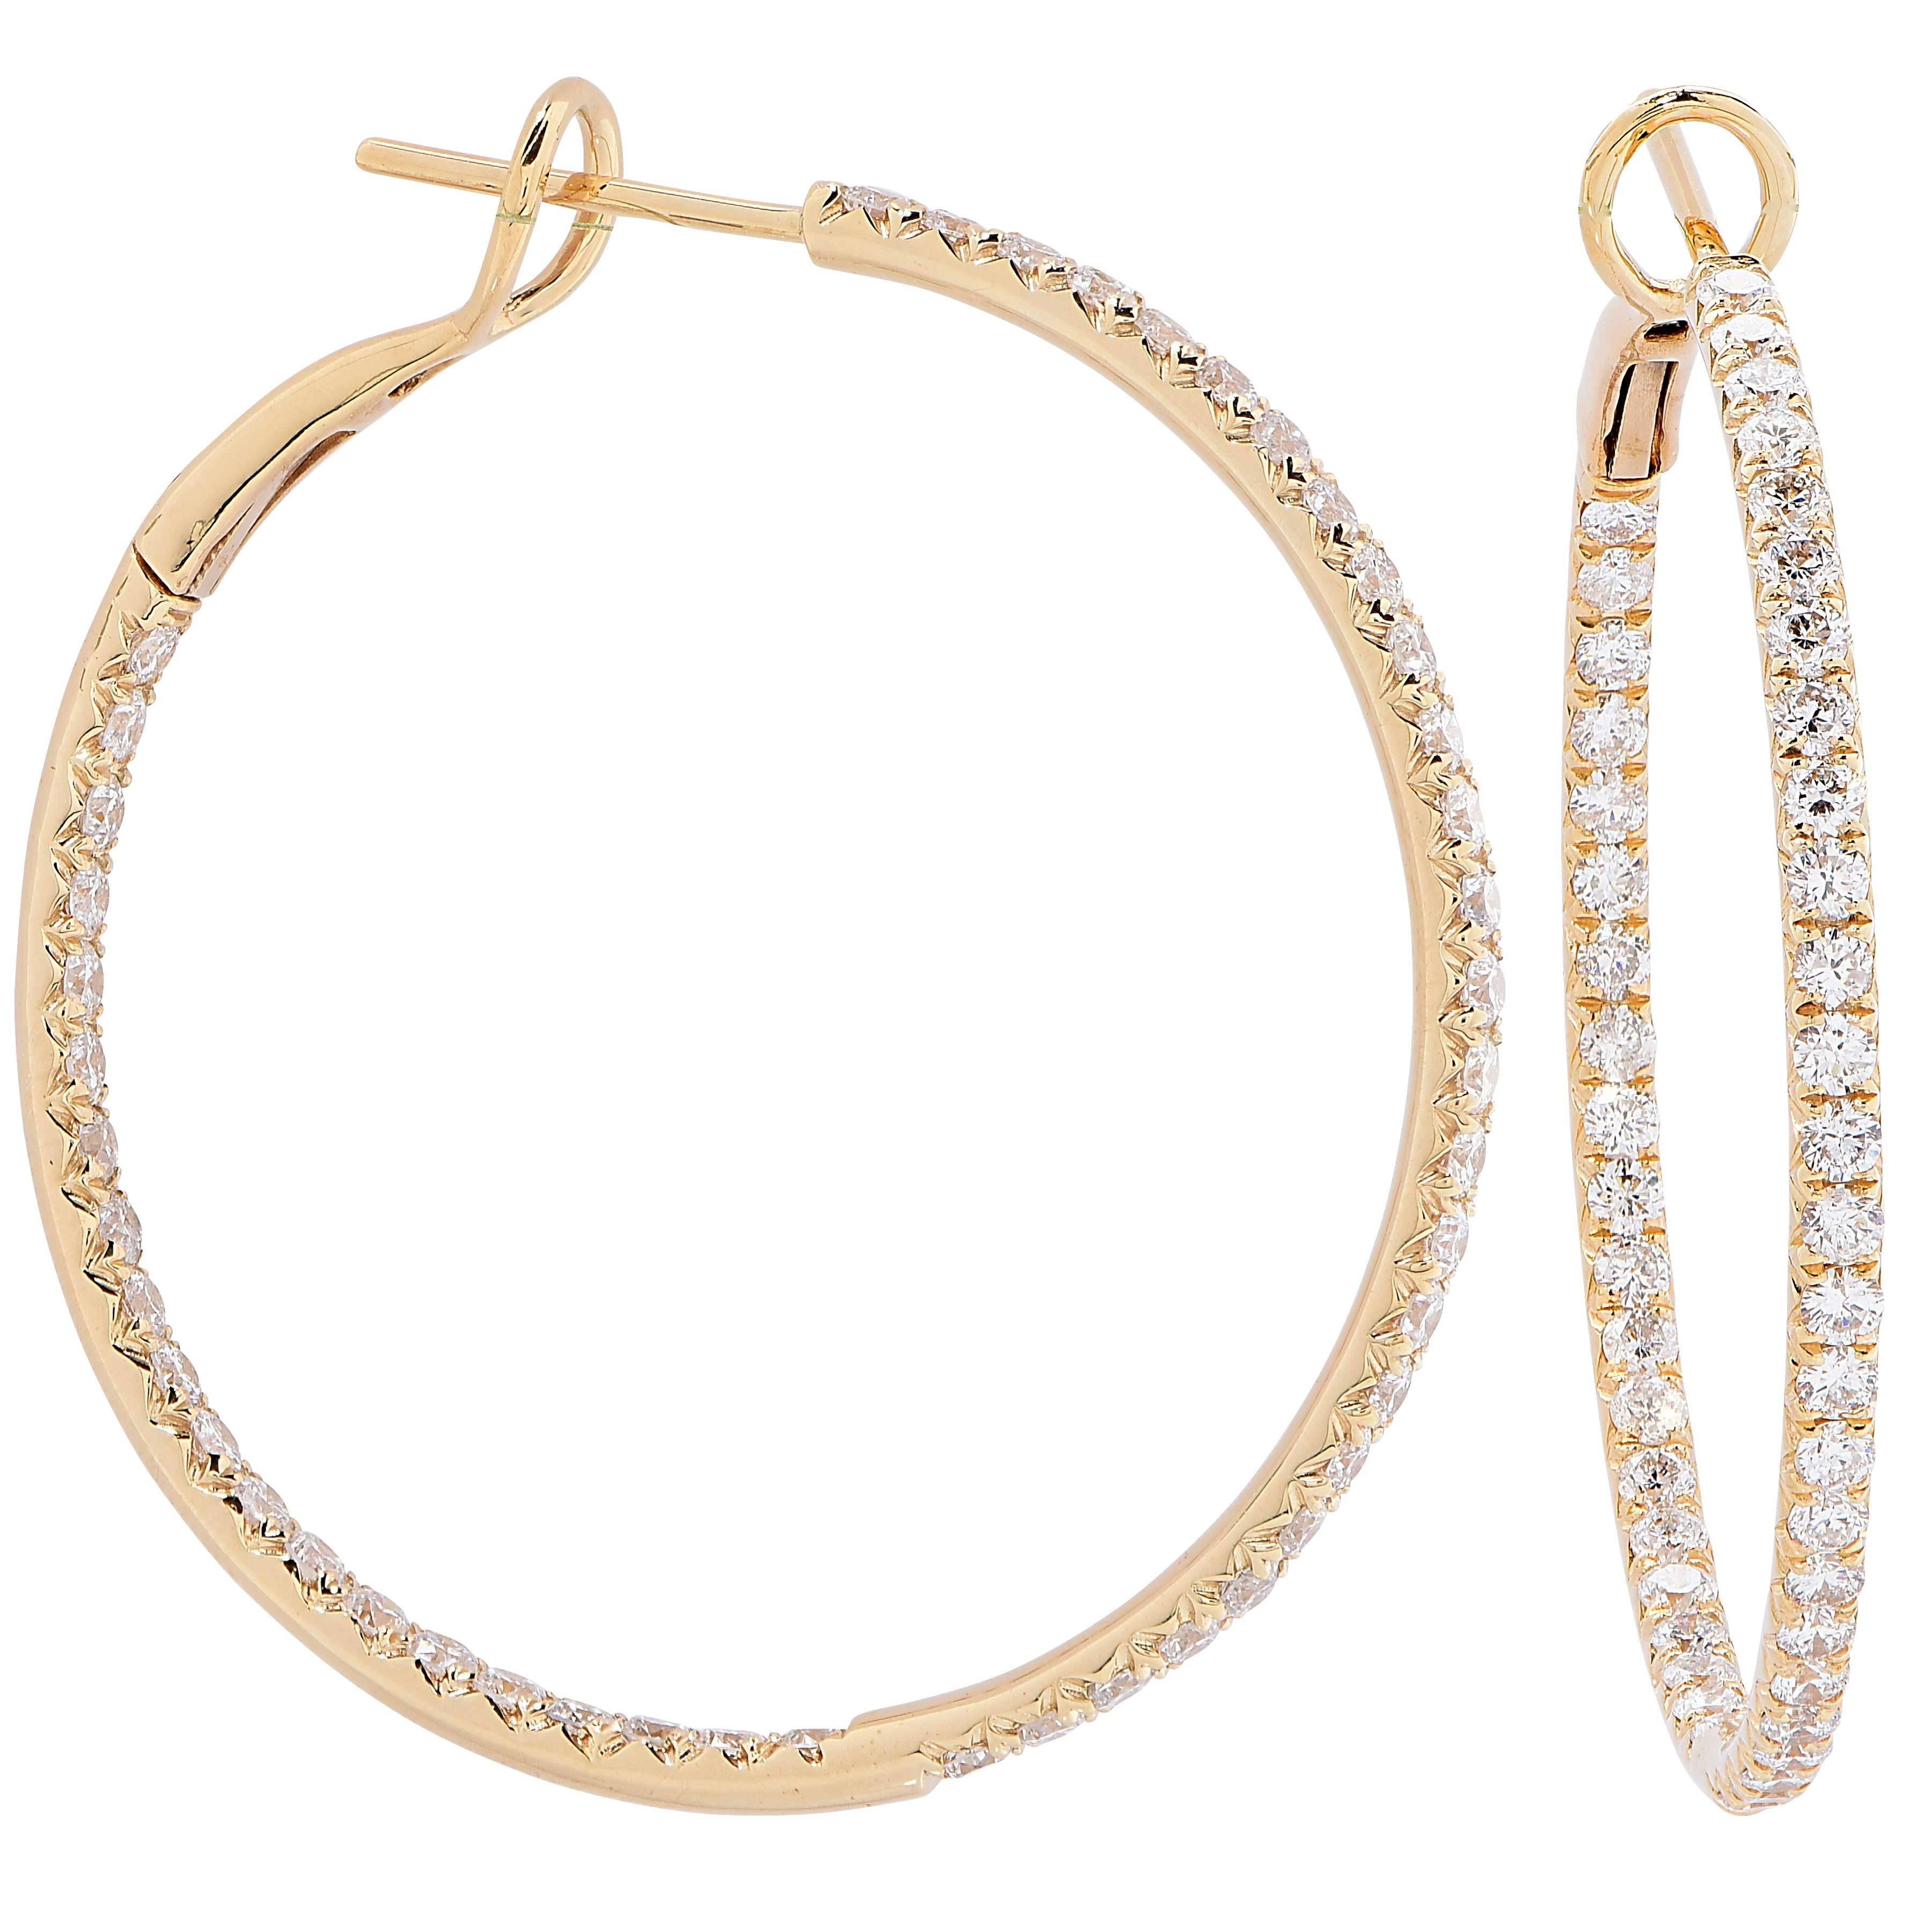 2 Carat Diamond Hoop earrings featuring 92 round cut diamonds set in 18 KT Yellow Gold.

Metal Type: 18Kt yellow Gold
Metal Weight" 6.5 Grams